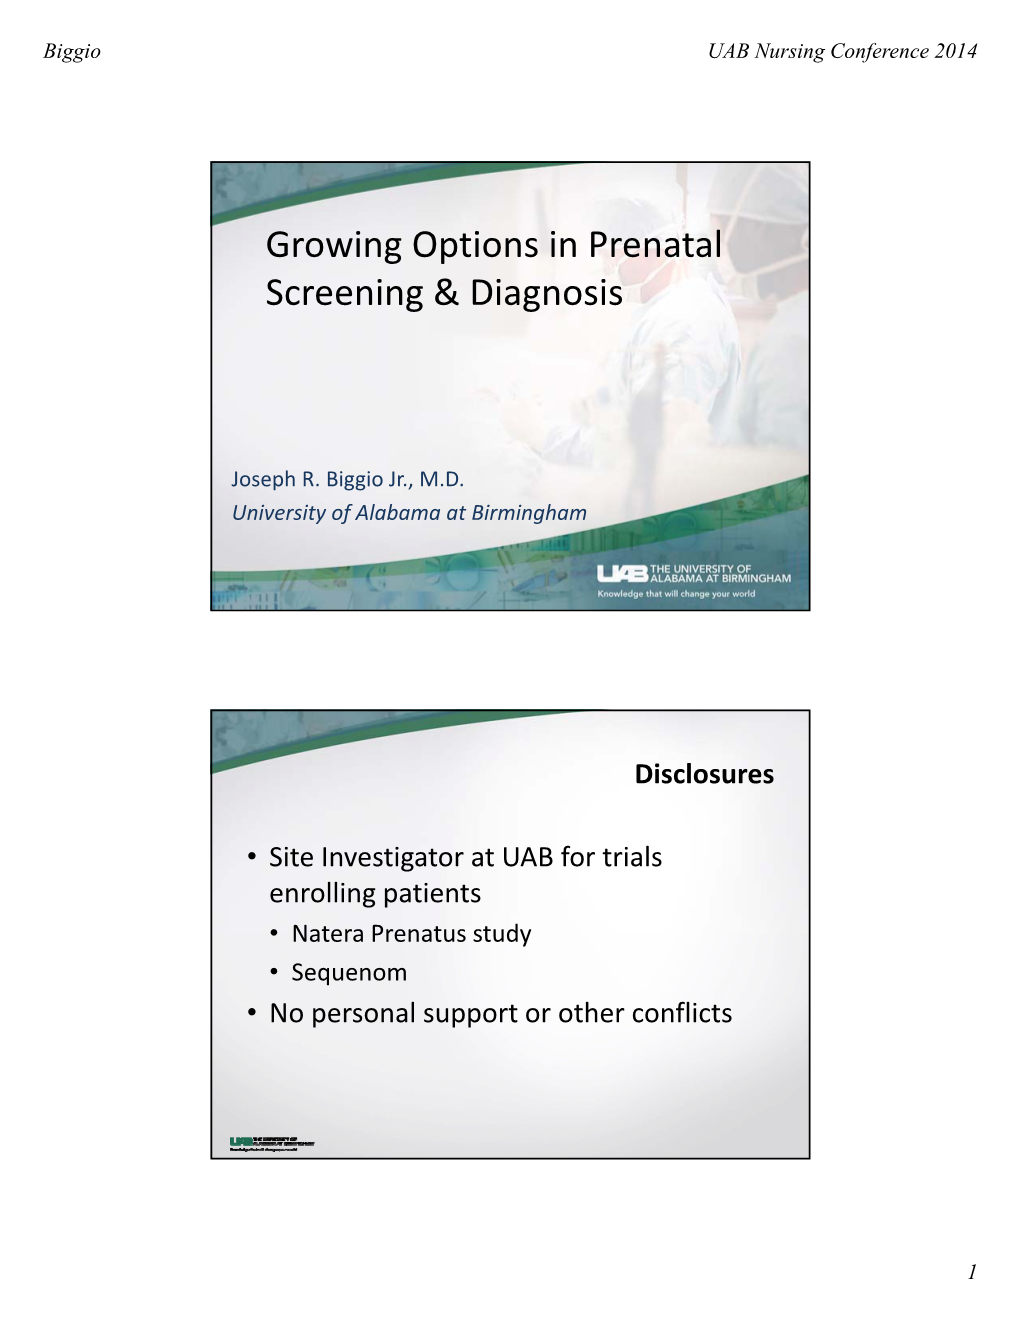 Growing Options in Prenatal Screening & Diagnosis